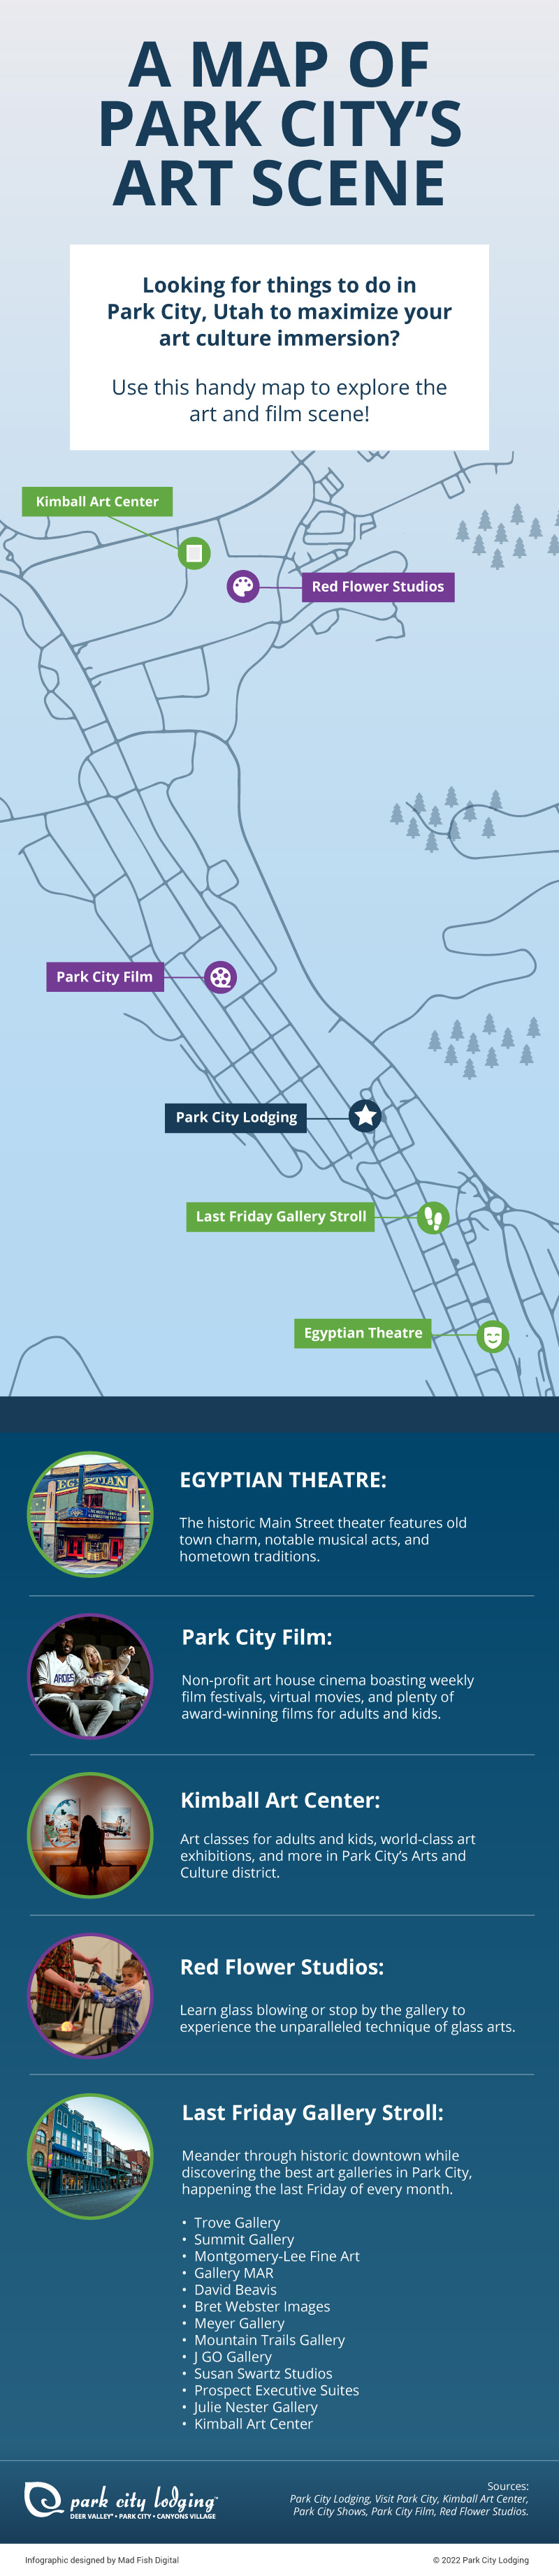 Infographic map of Park City's art scene